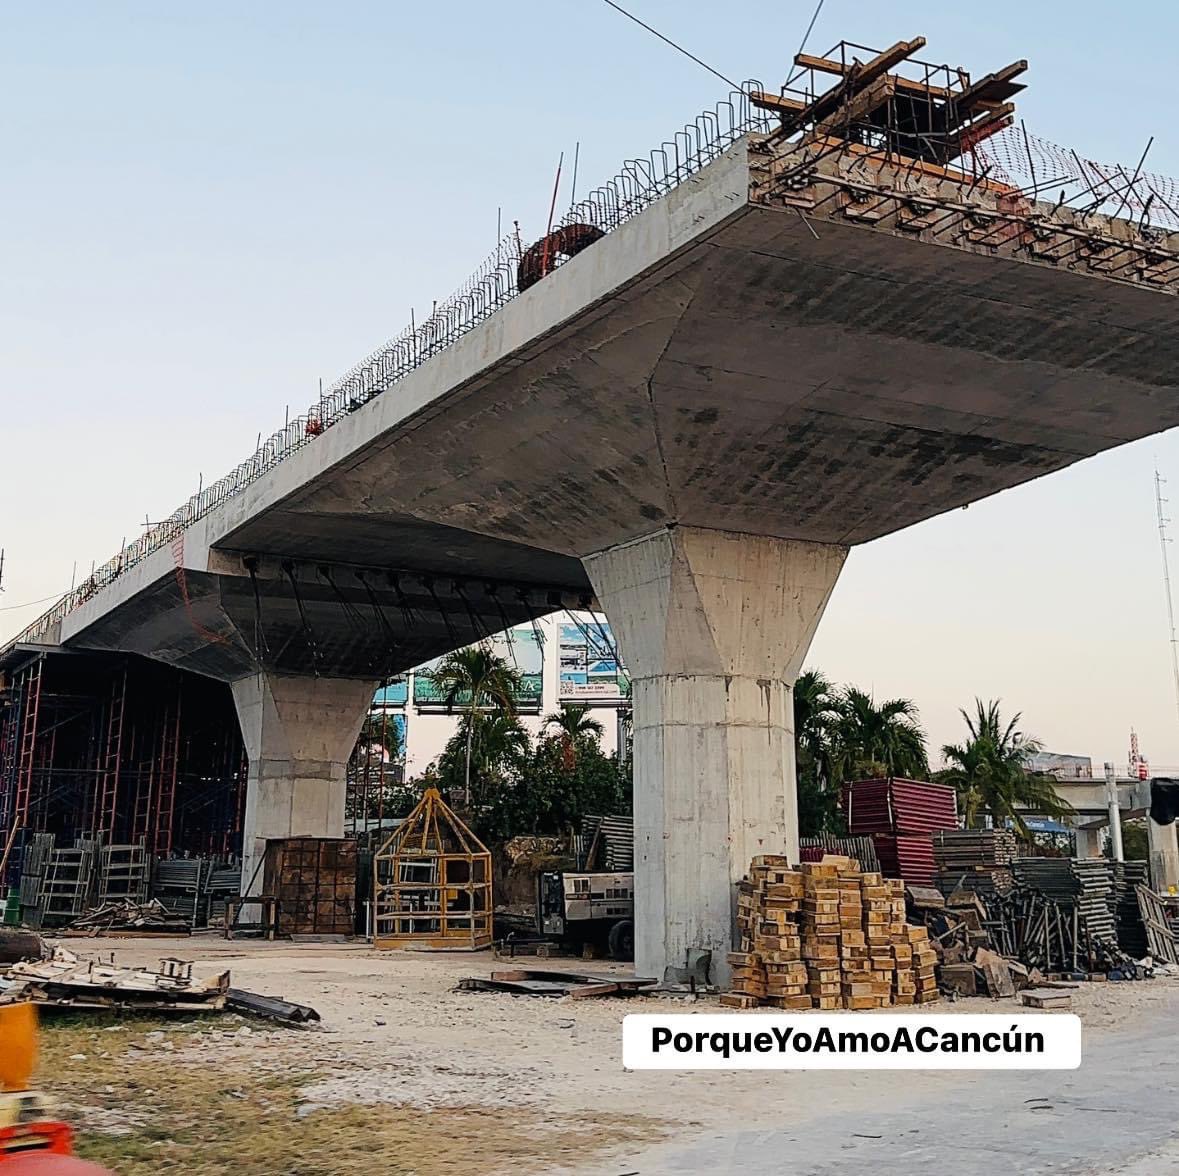 El puente Nichupté avanza a paso firme 😎
#OrgullosamenteCancunense ❤️